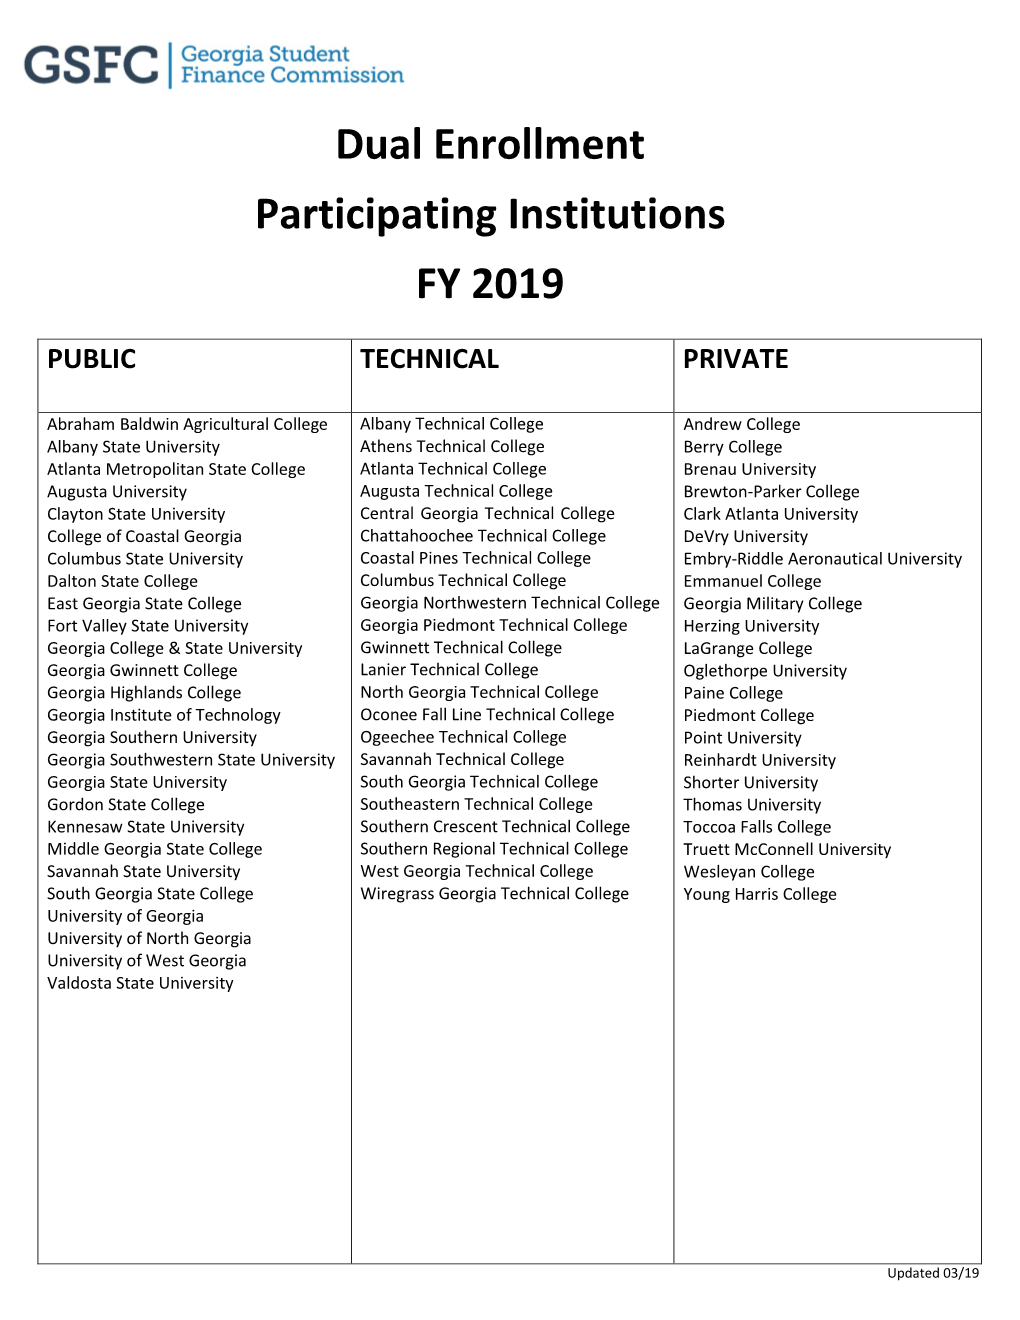 Dual Enrollment Participating Institutions FY 2019